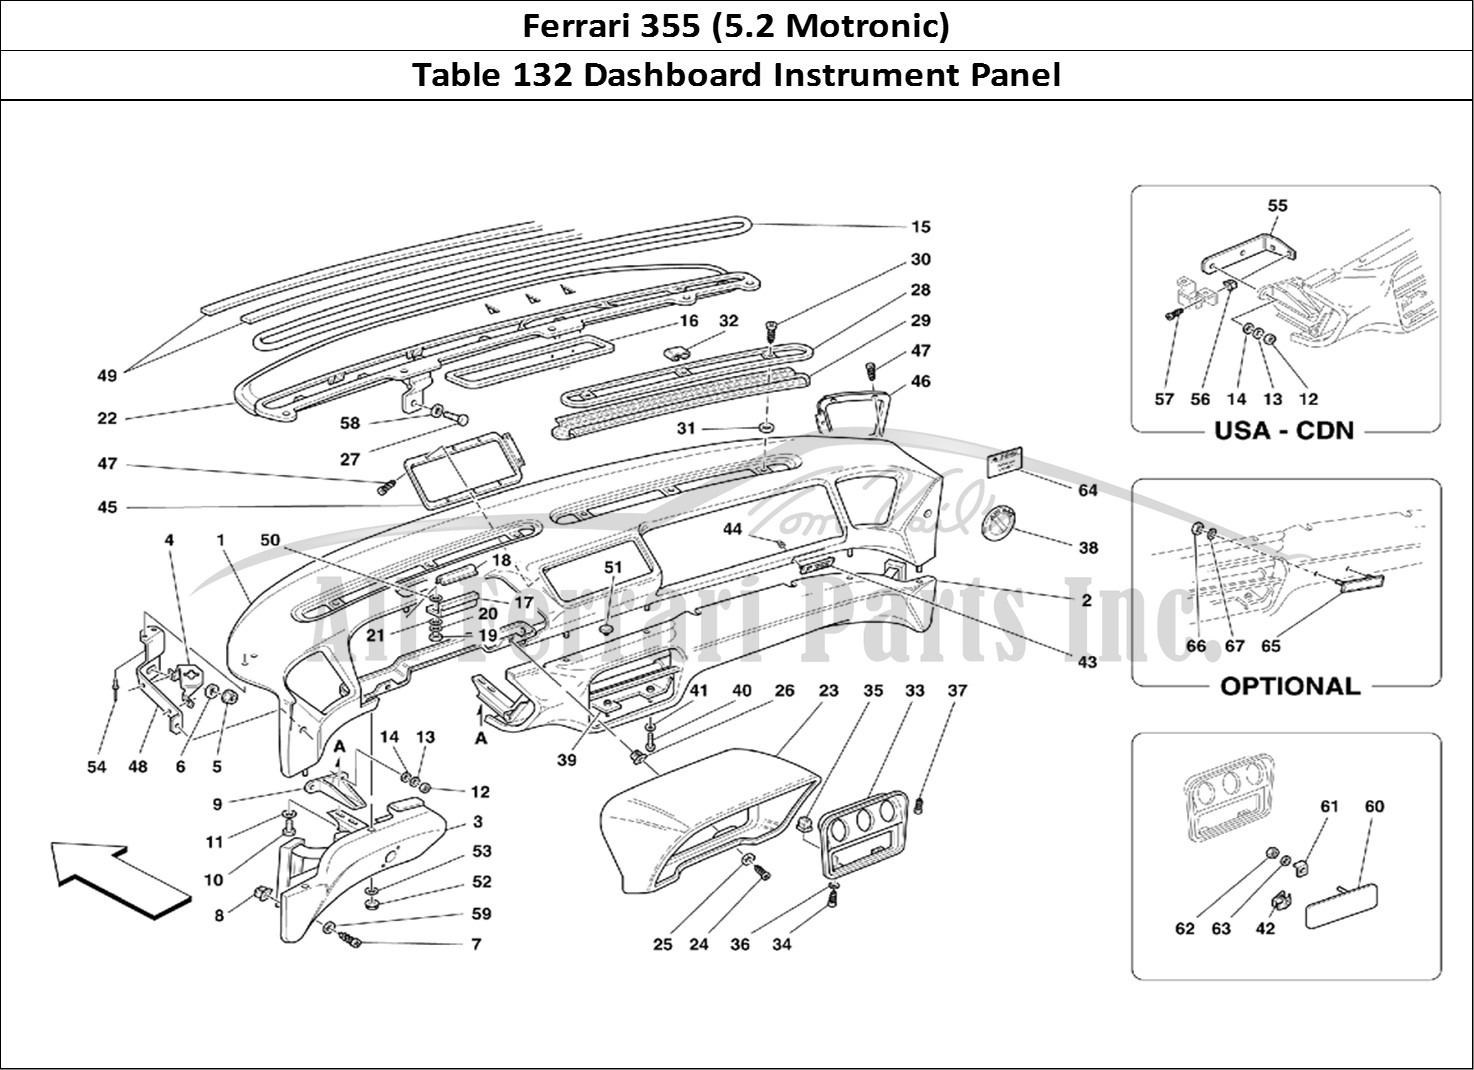 Ferrari Parts Ferrari 355 (5.2 Motronic) Page 132 Dashboard